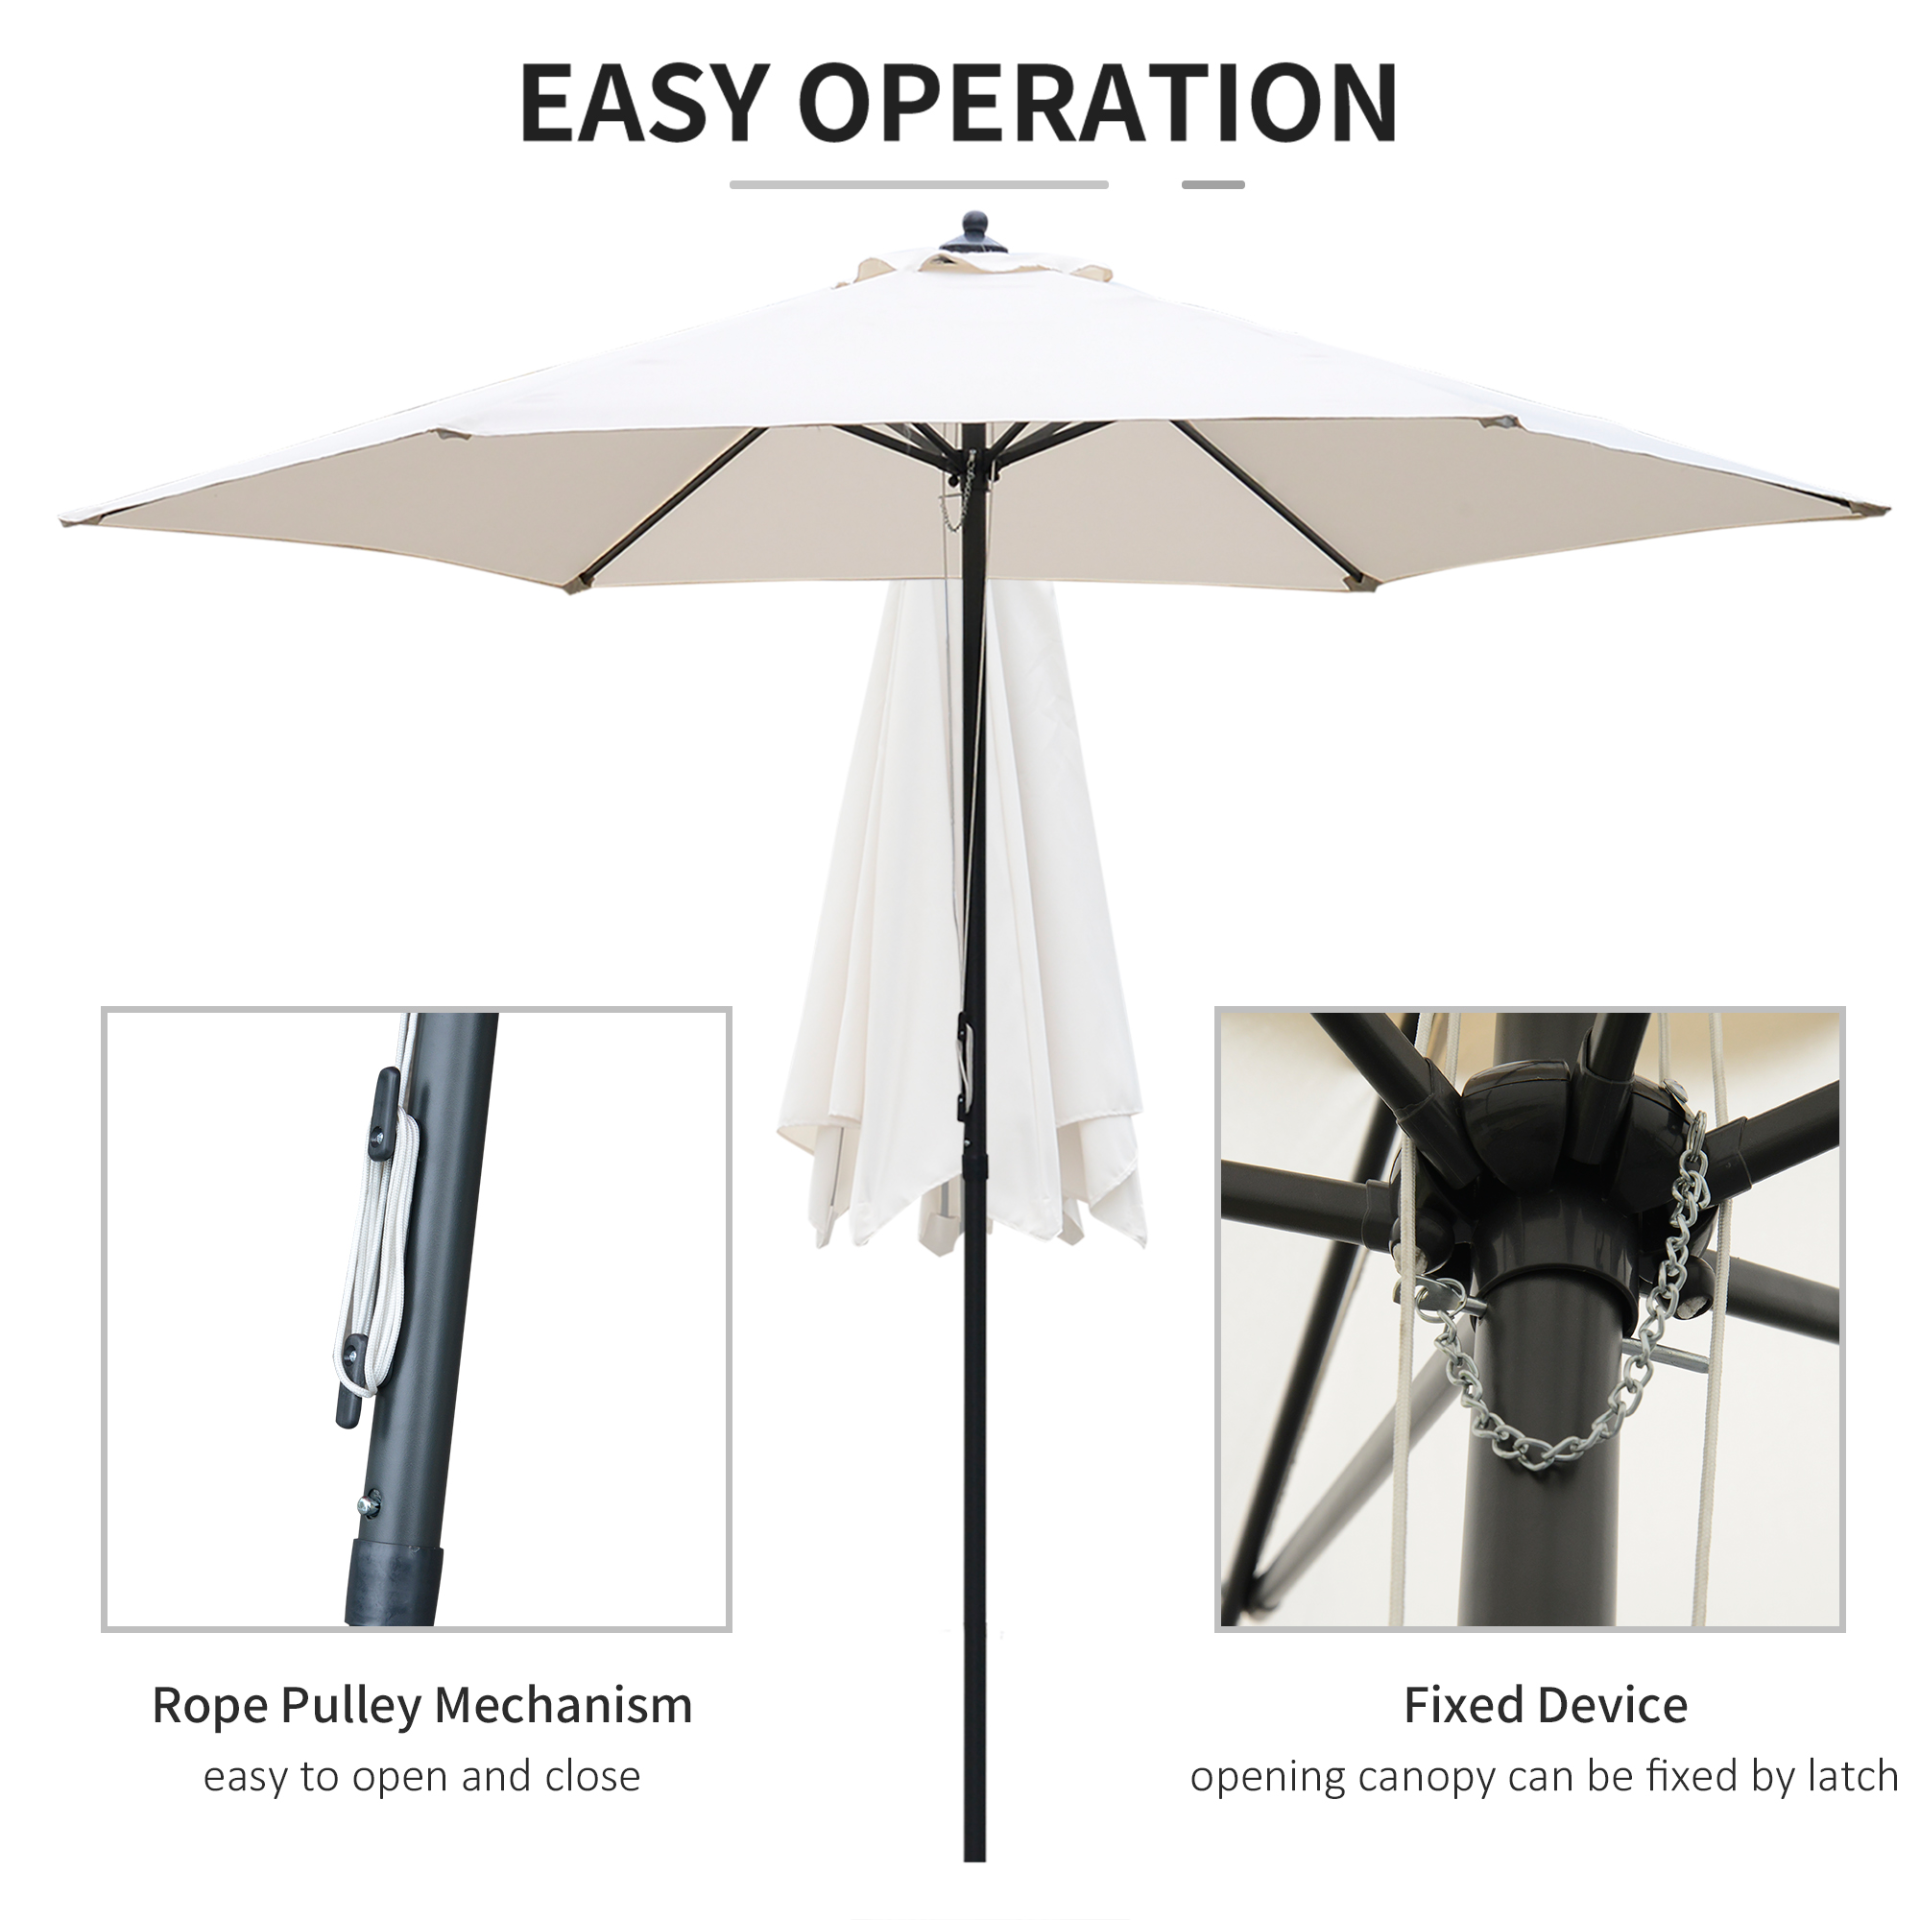 Outsunny 2.8m Patio Parasols Umbrellas Outdoor 6 Ribs Sunshade Canopy Manual Push Garden Backyard Furniture, Off-White